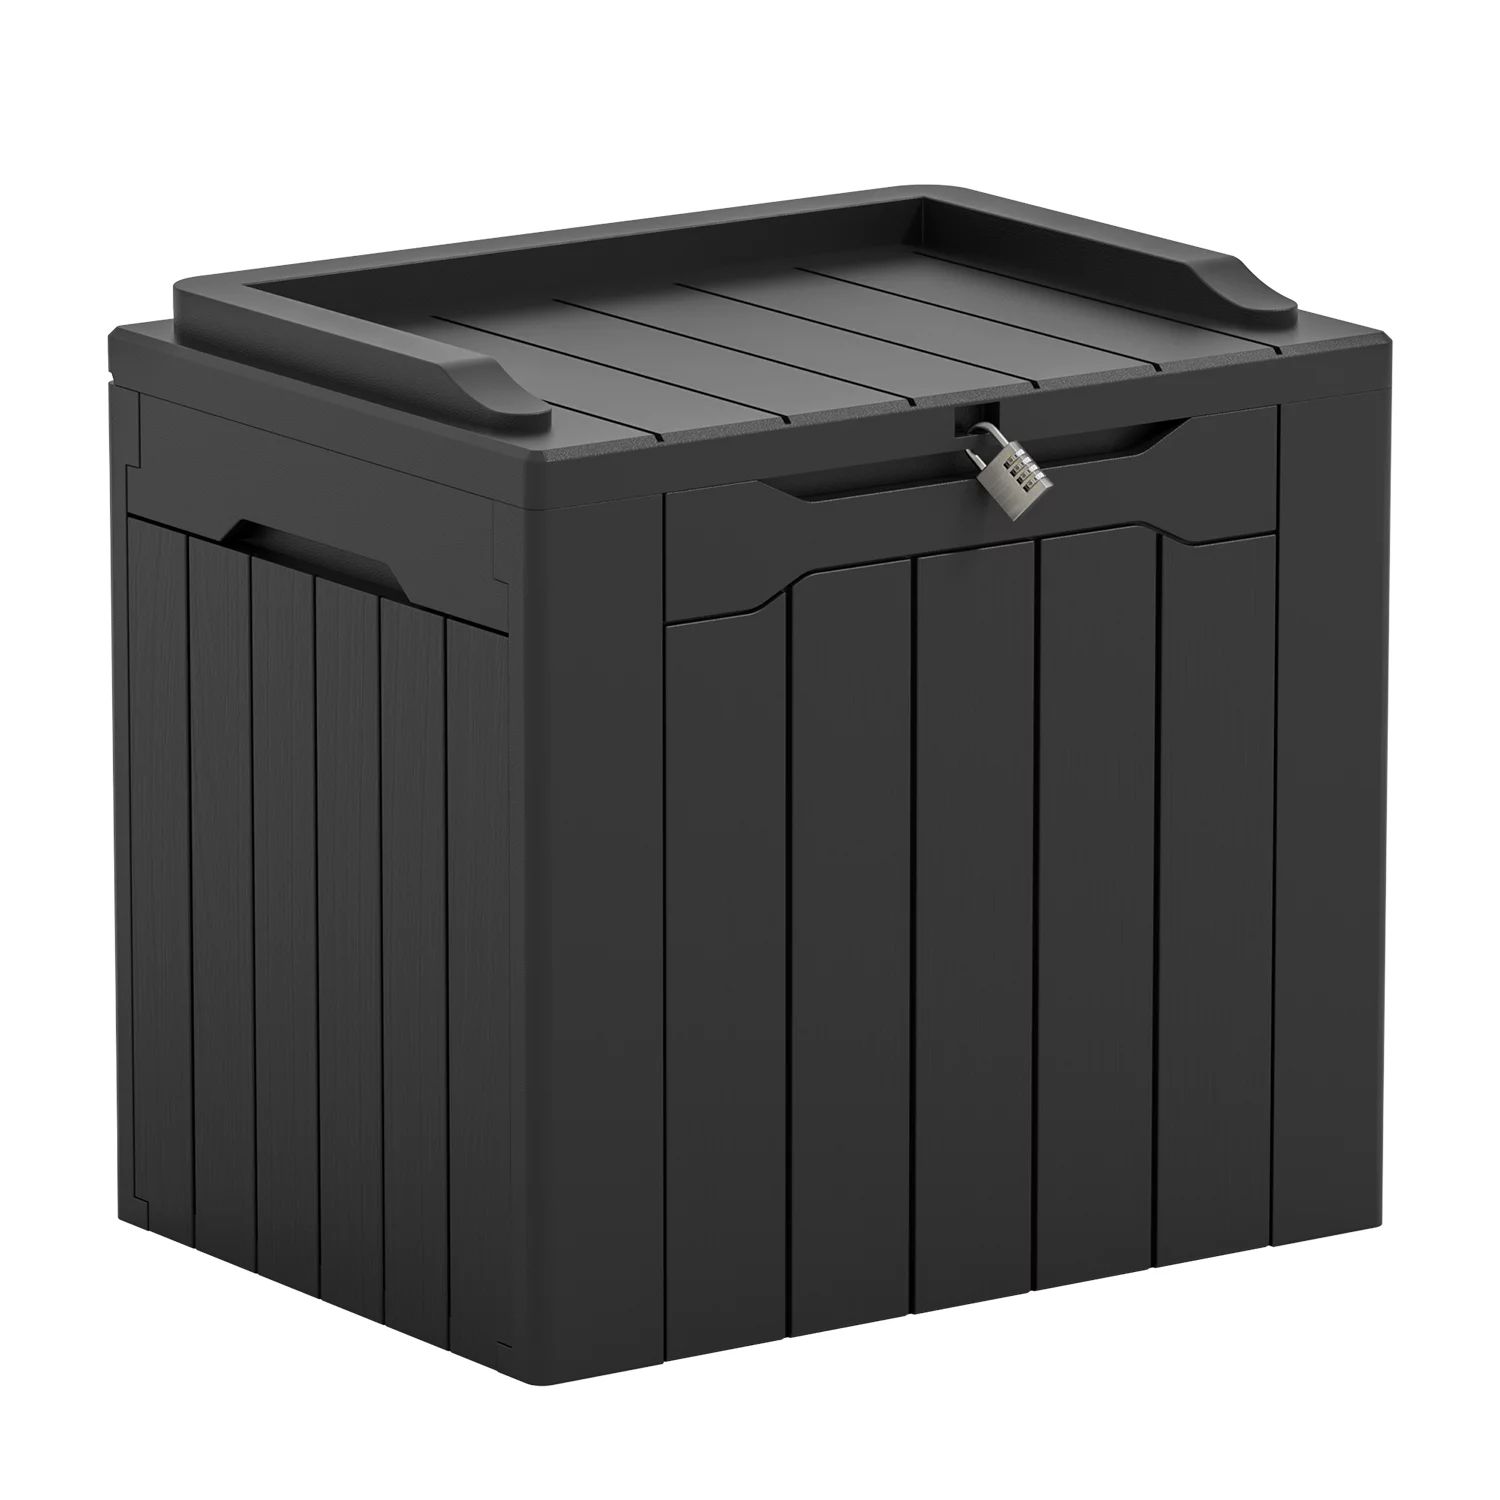 Devoko 32 Gallon Outdoor Resin Deck Box with Seat, Black | Walmart (US)